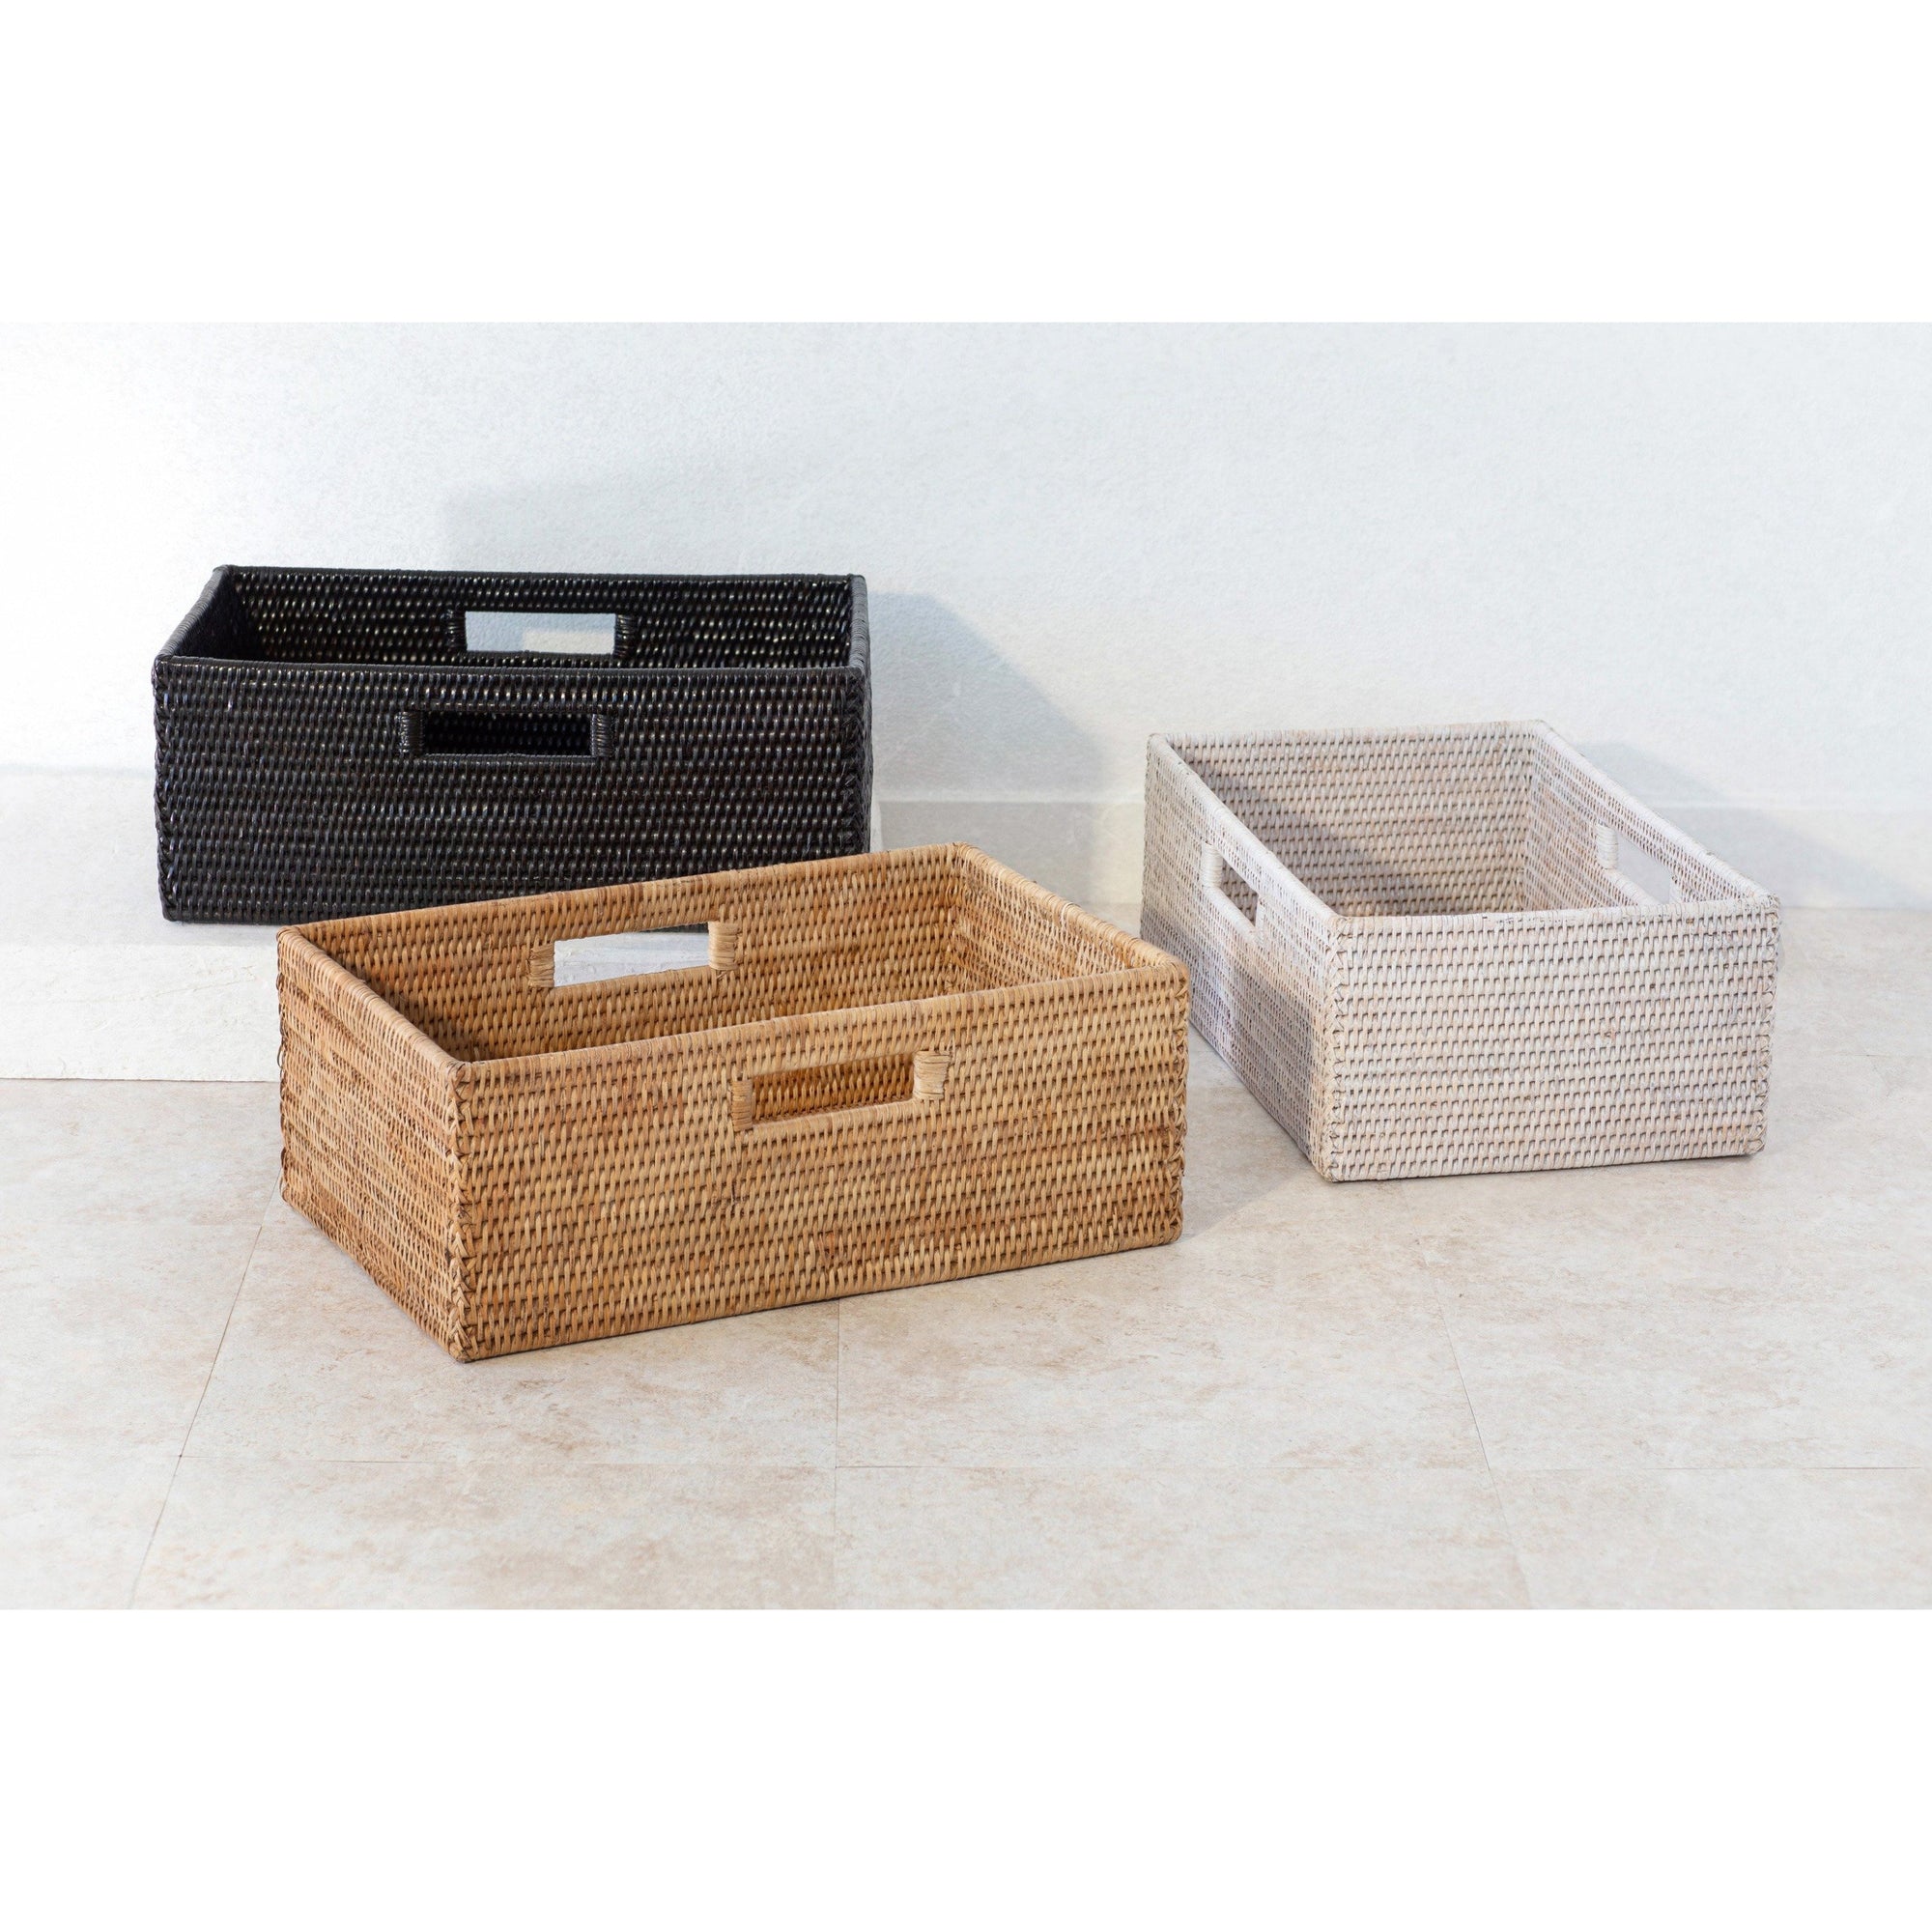 Rectangular shelf baskets for storage